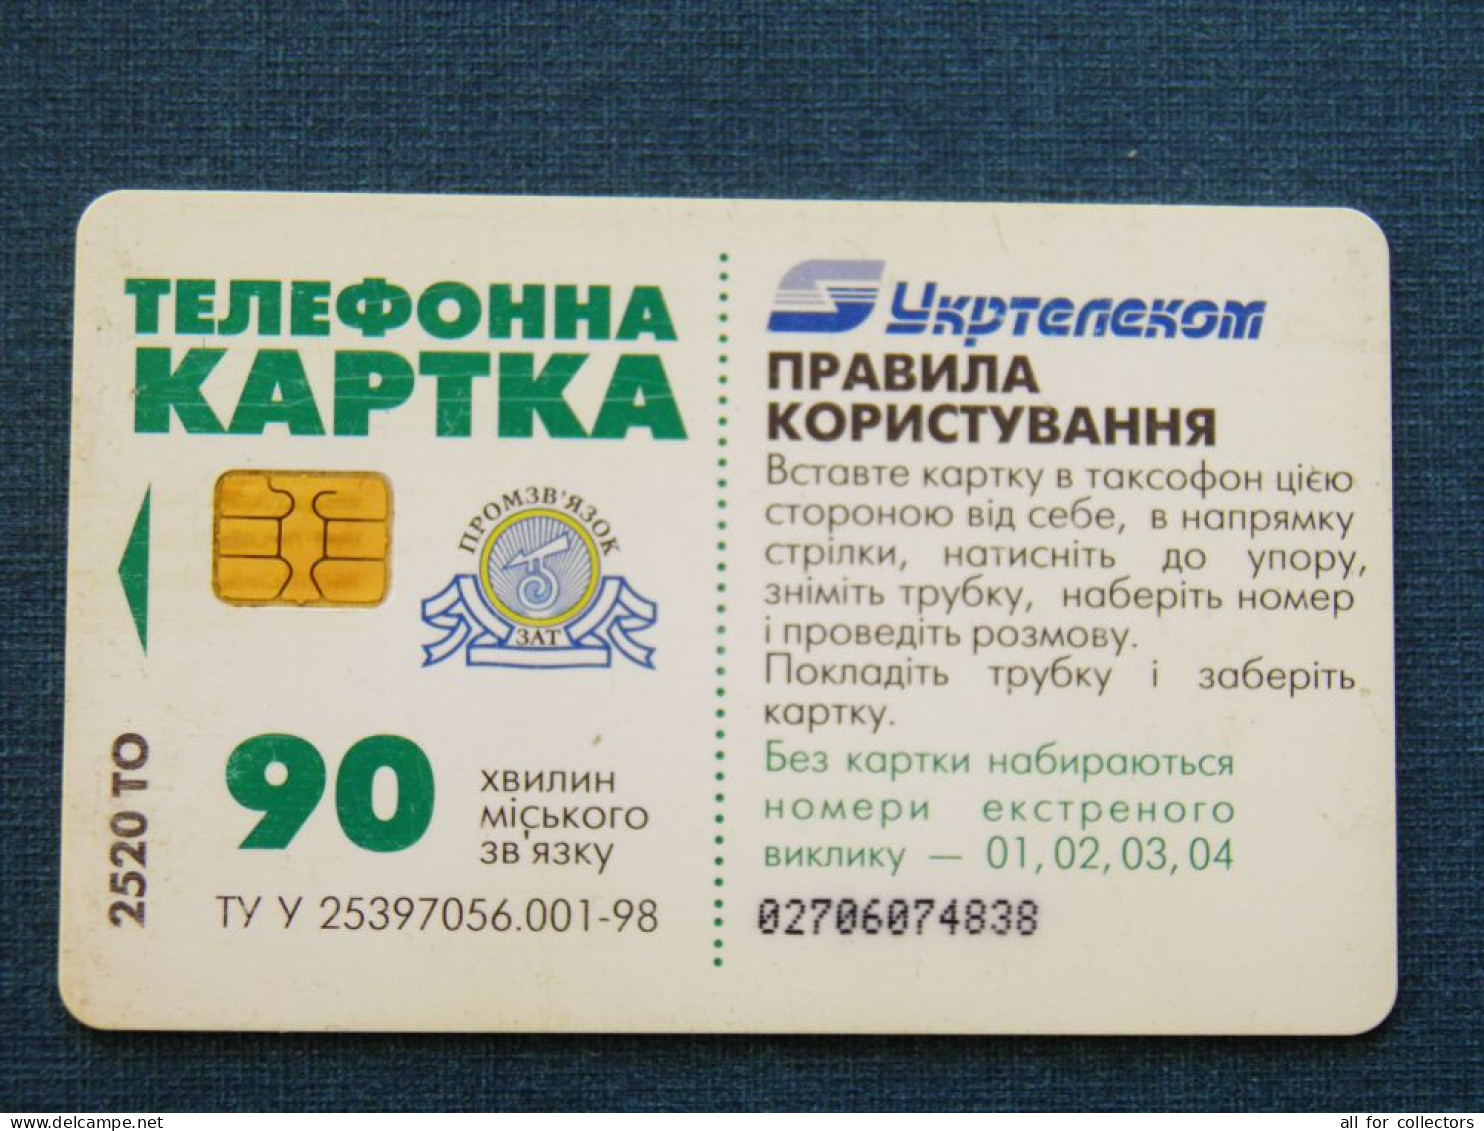 Phonecard Chip Advertising Internet Service Provider Ukrtelecom Relcom Angel Child Map 2520 Units 90 Calls UKRAINE - Ukraine